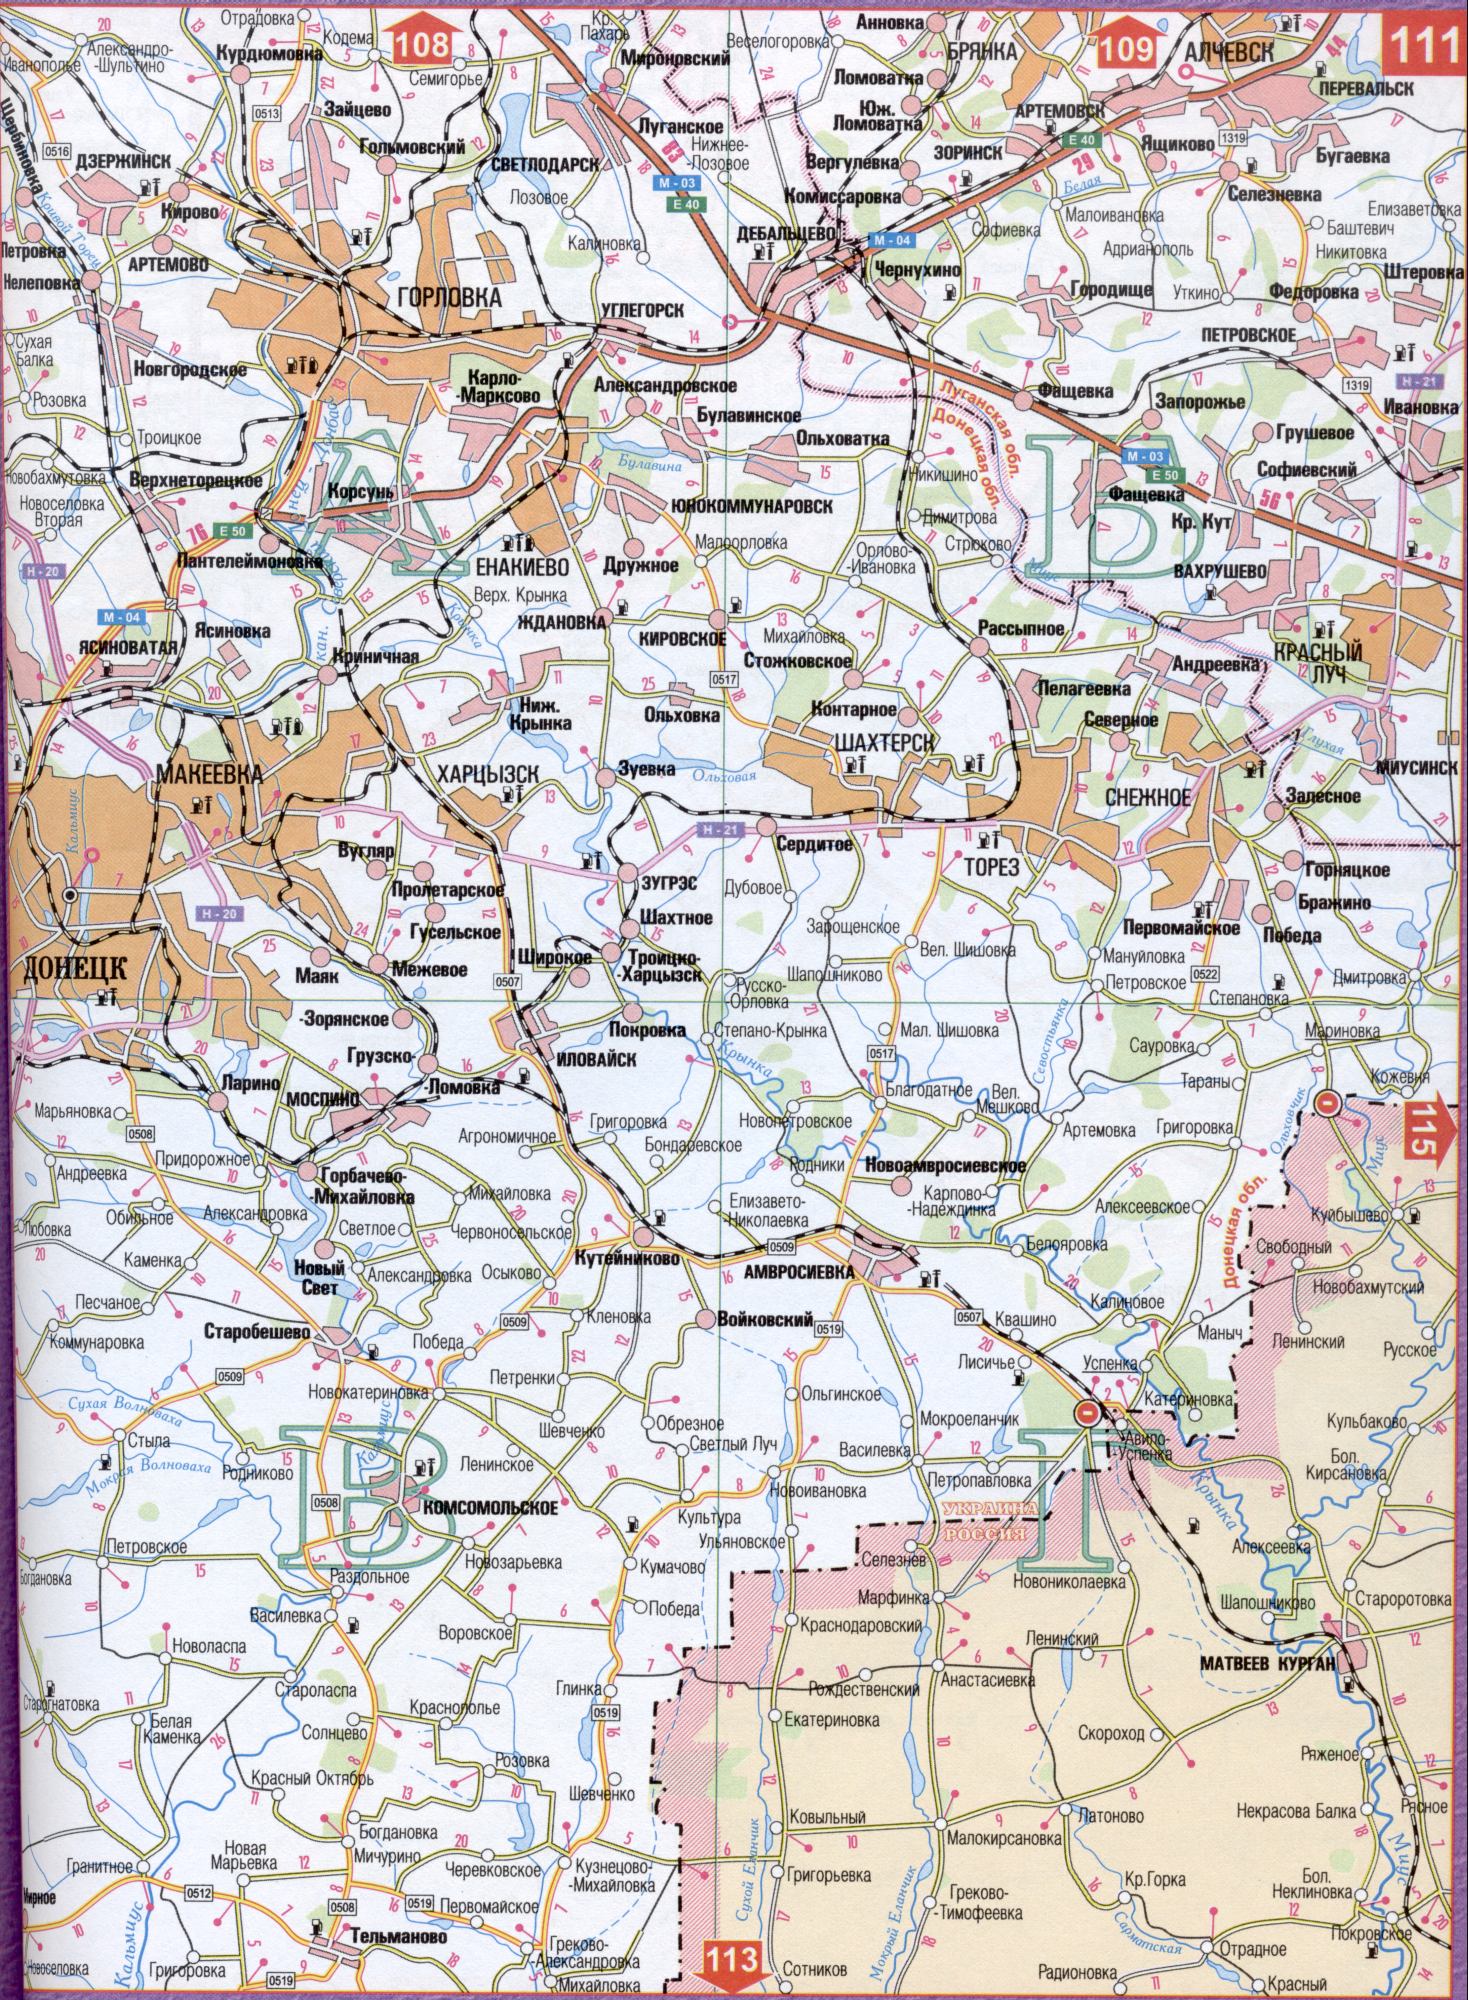 The map of the Donetsk region of Ukraine 1cm = 5km (motor roads - Donetsk region, the regional center of Donetsk). Download a detailed map of the Grekovo-Alexandrovka, Grekovo-Timofeevka, Starorotovka, Molokolanchik